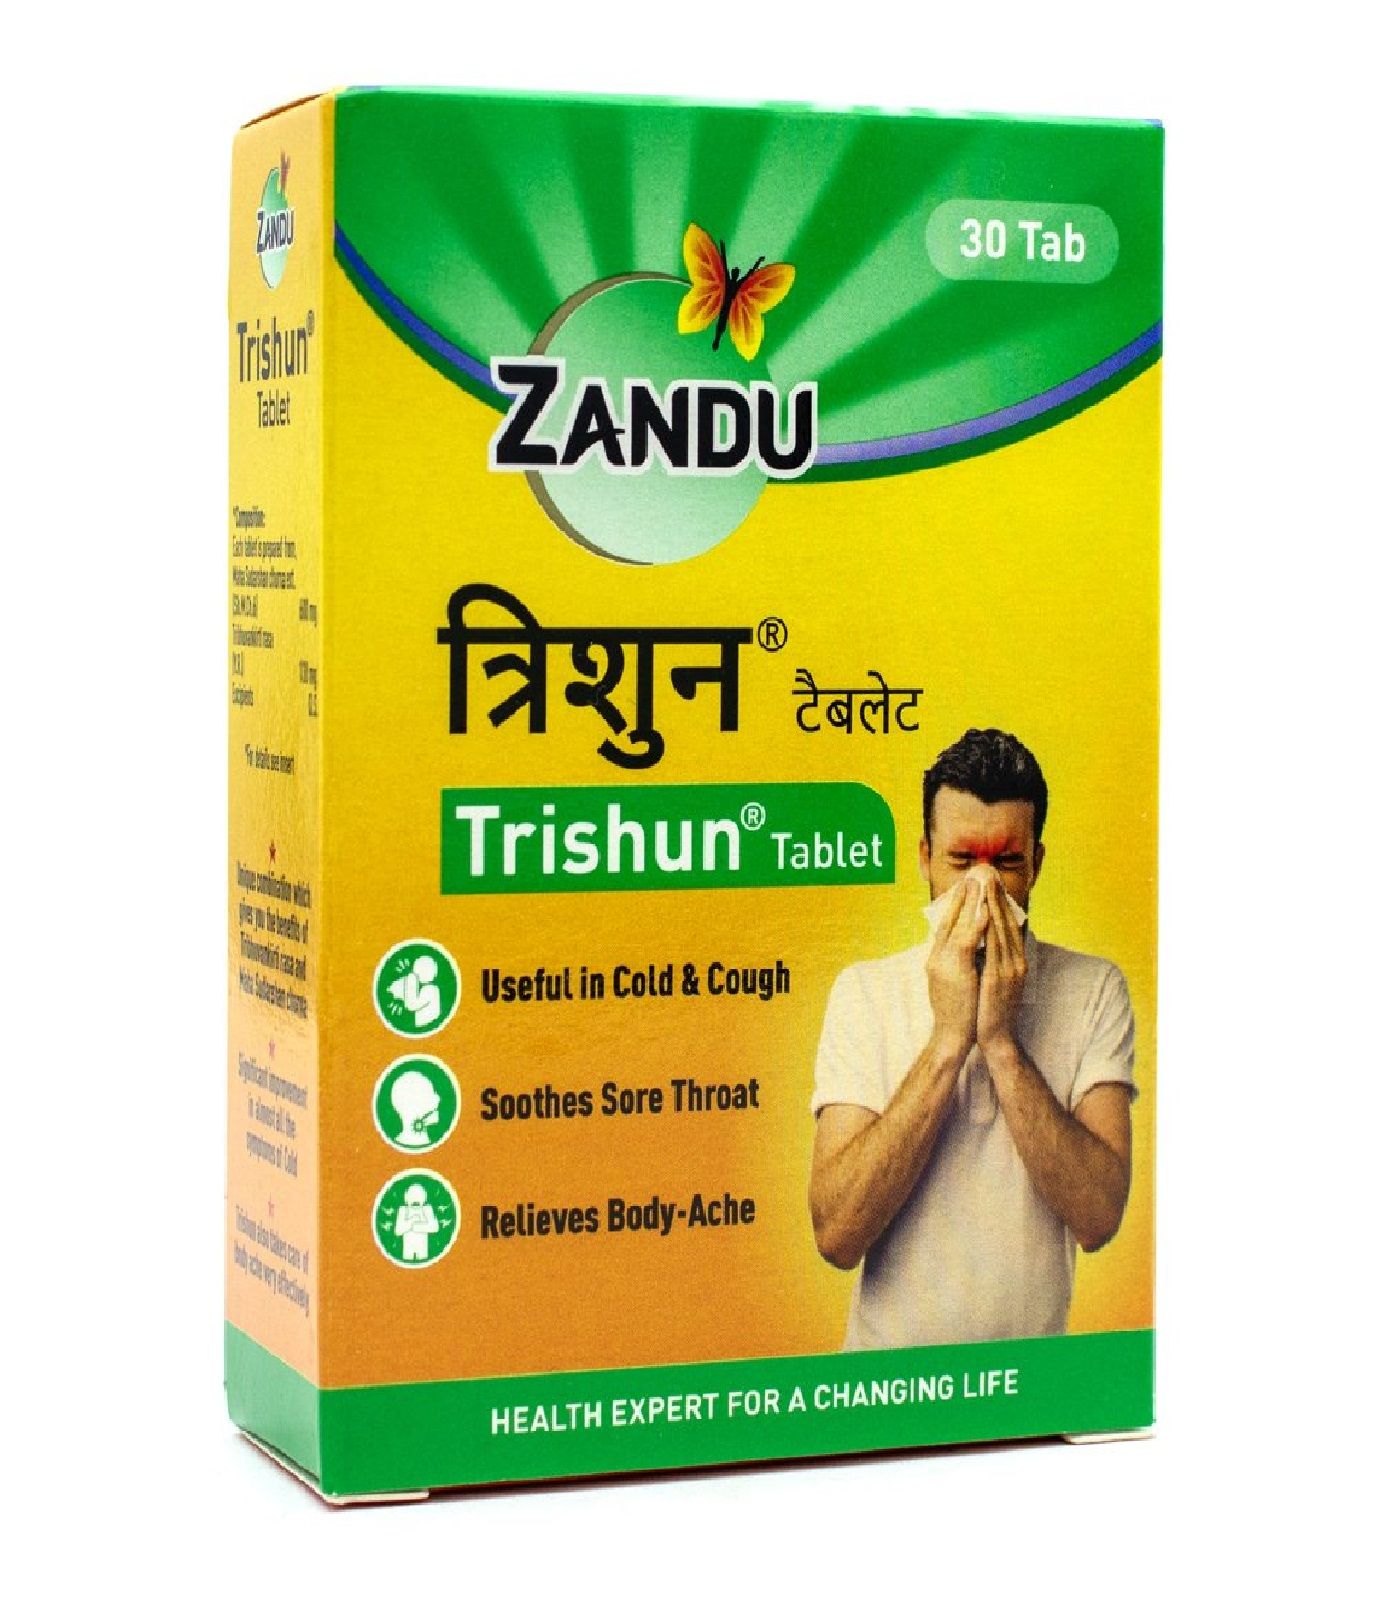 Zandu trishun отзывы. Trishun Zandu таблетки состав. Zandu Трифала для укрепления иммунитета и очищения организма 30таб.